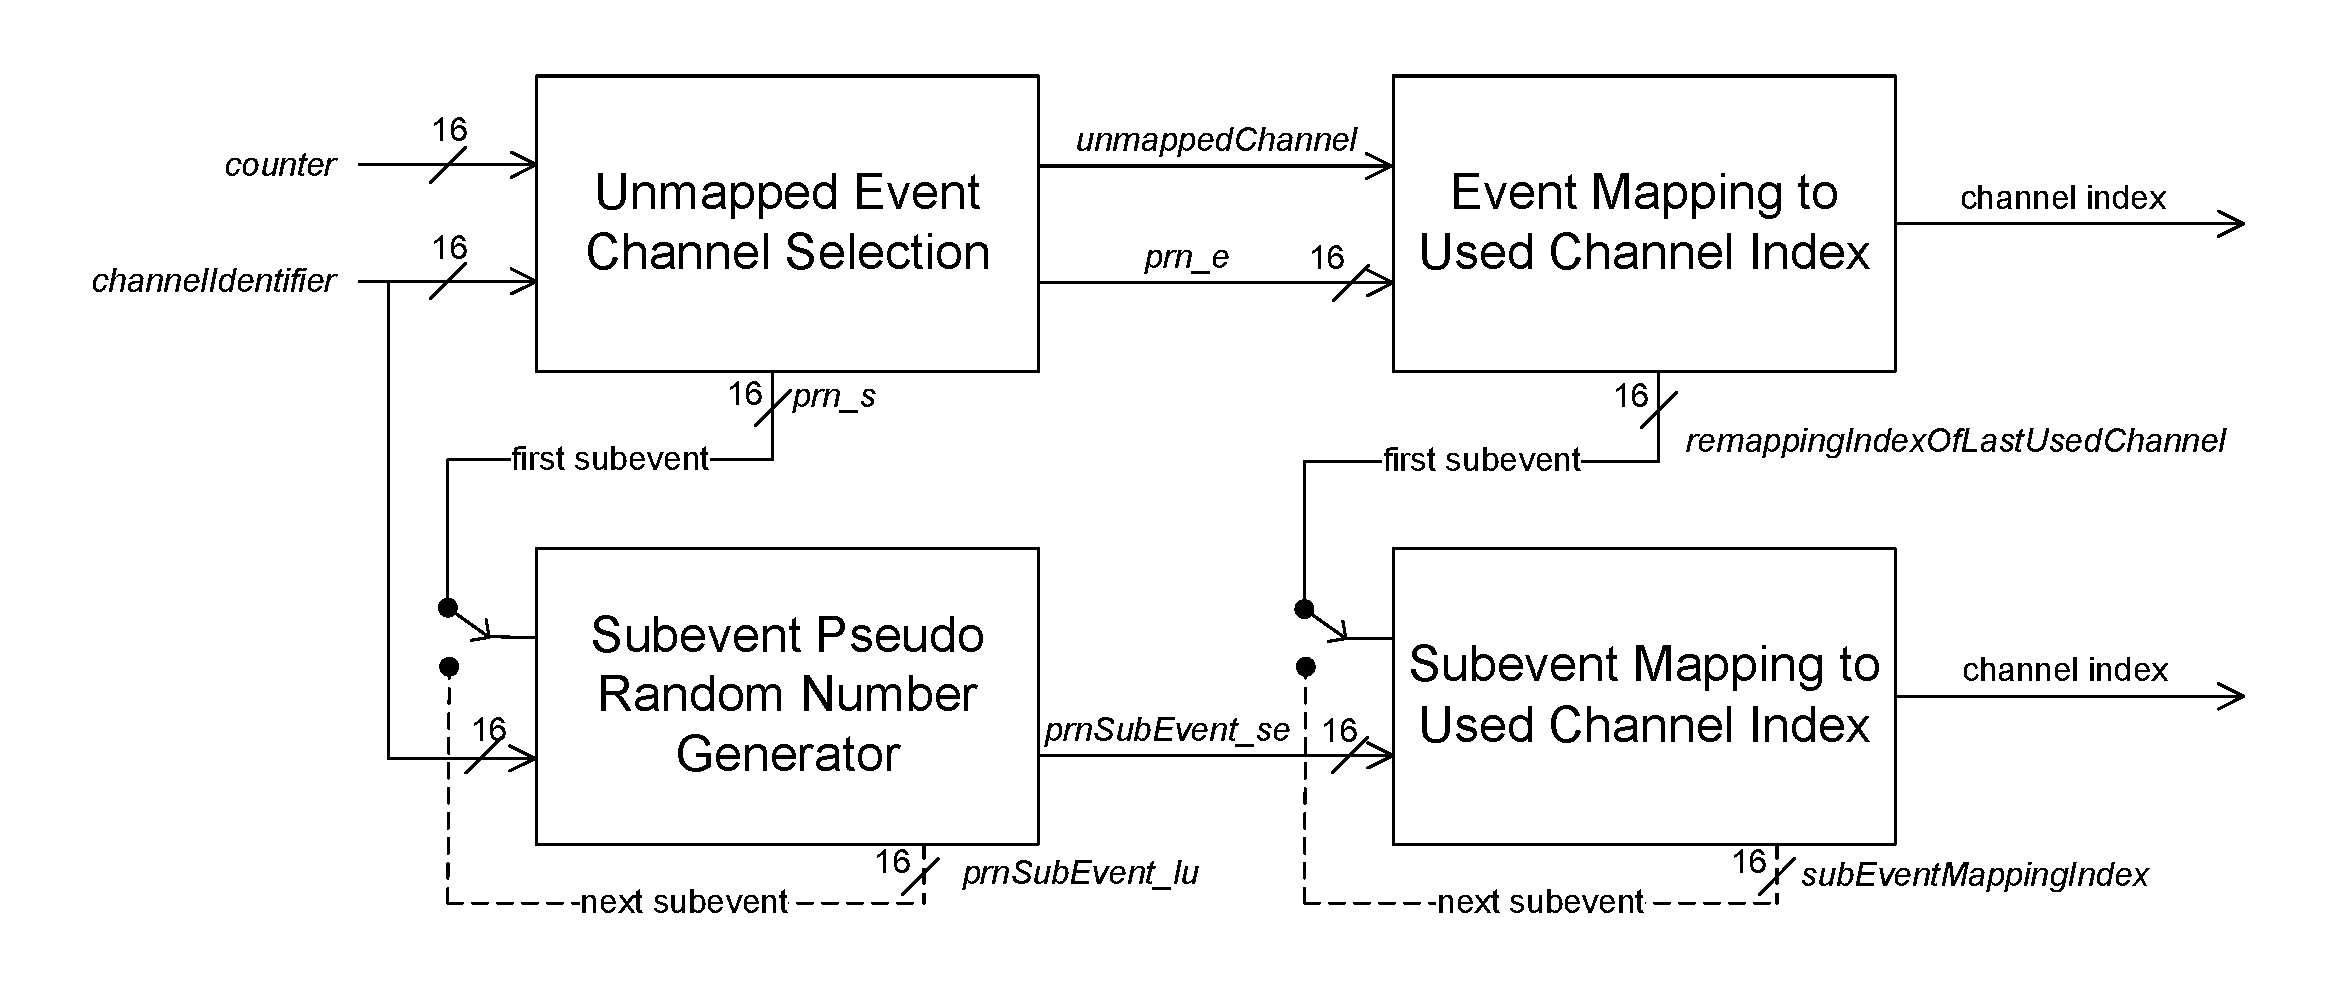 General block diagram of Channel Selection algorithm #2